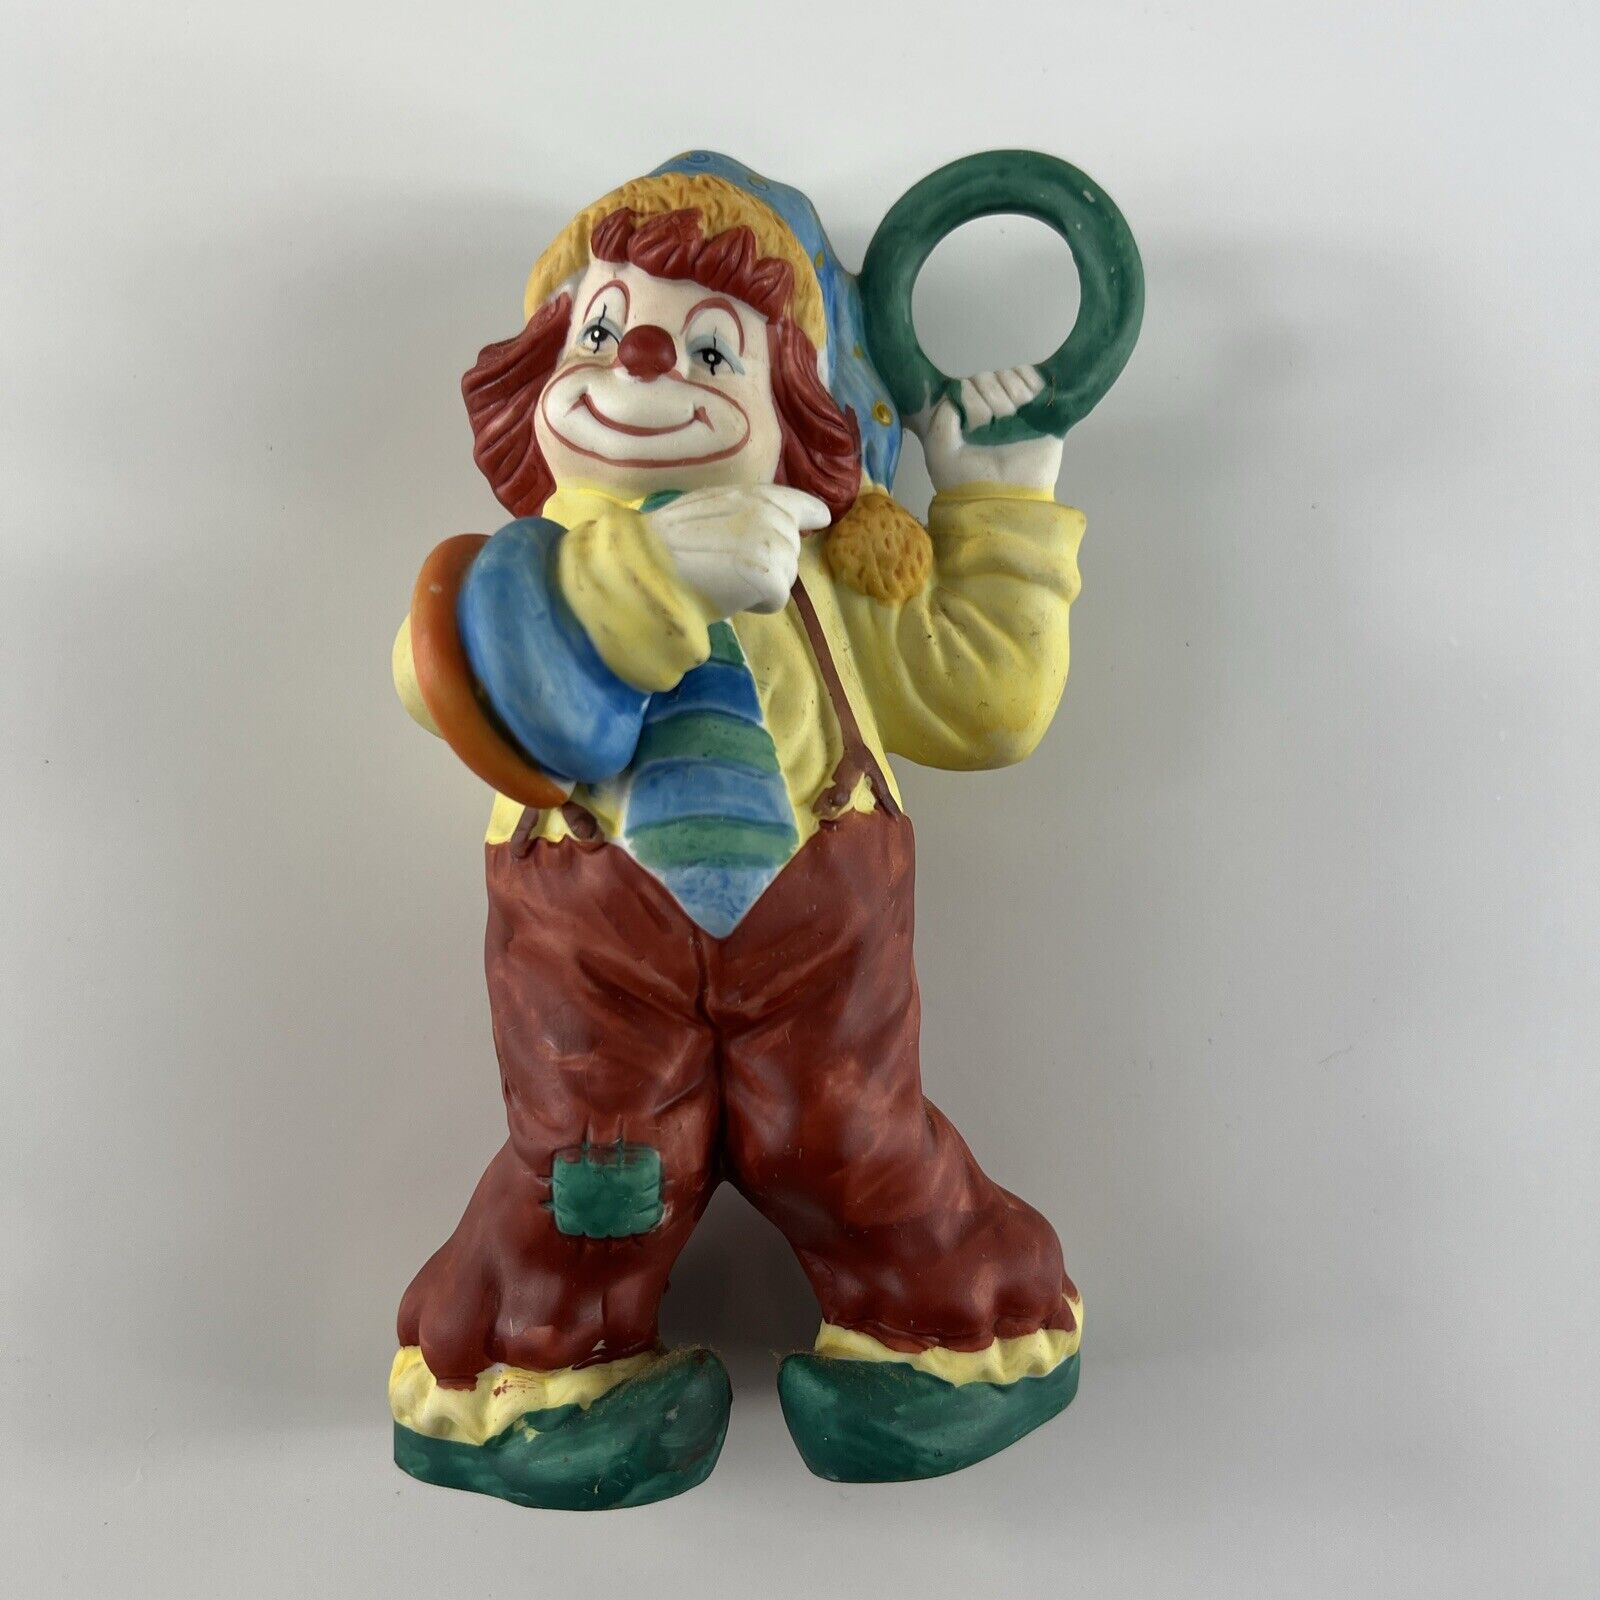 Enesco Circus Clown Ceramic Figurine Home Decoration 1985 Bright Colors